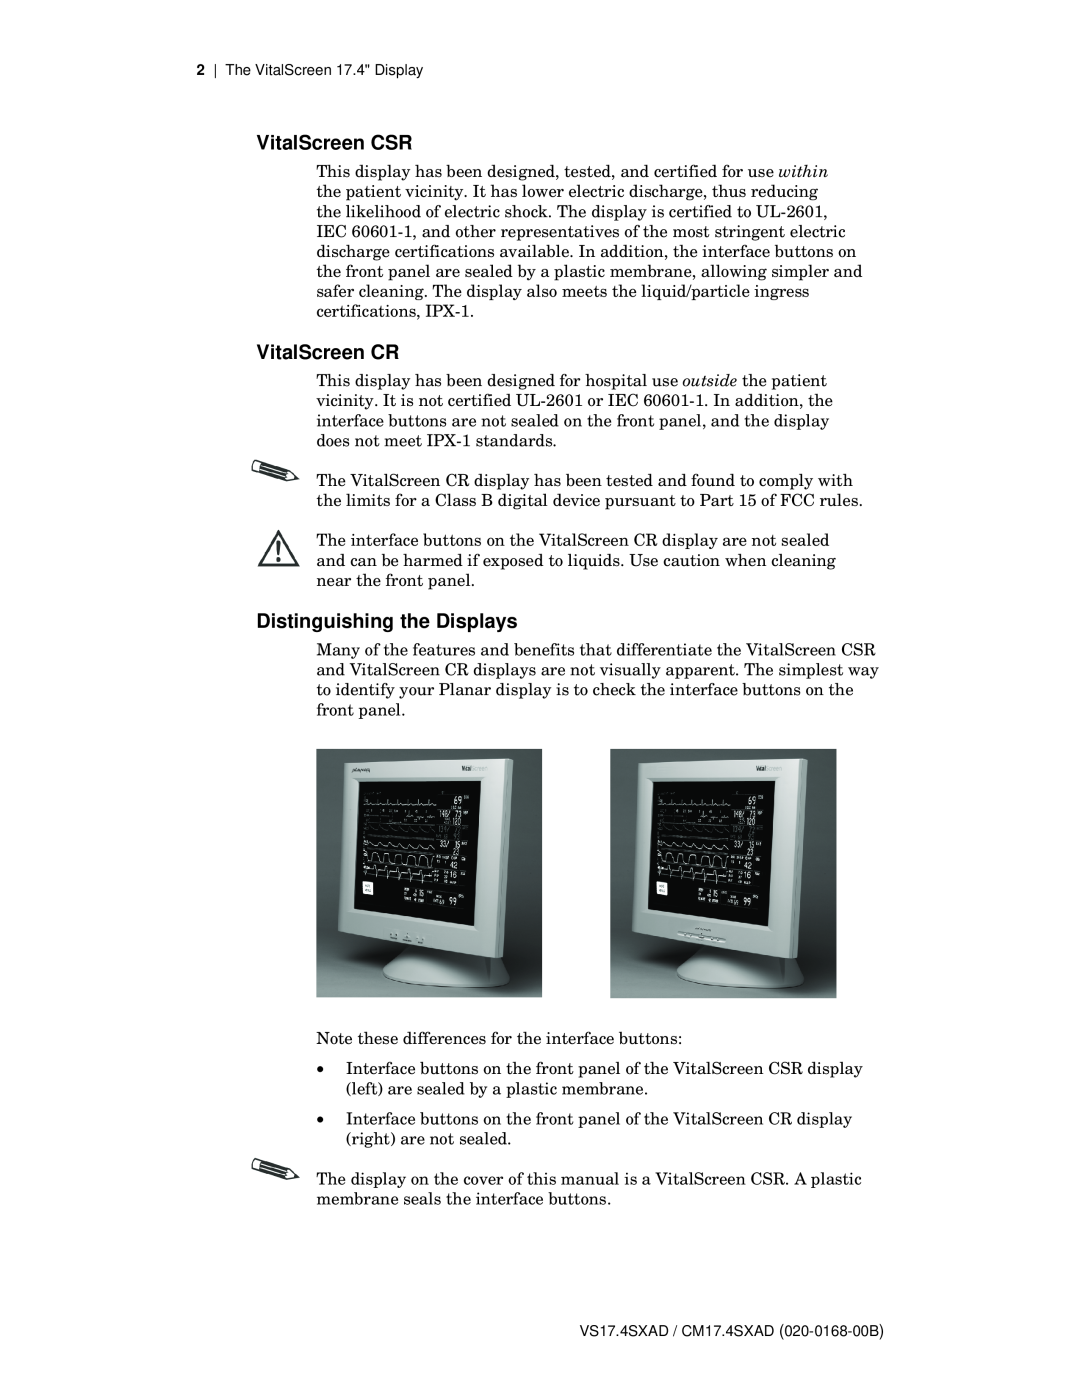 Planar VS17.4SXAD, CM17.4SXAD manual VitalScreen CSR, VitalScreen CR, Distinguishing the Displays 